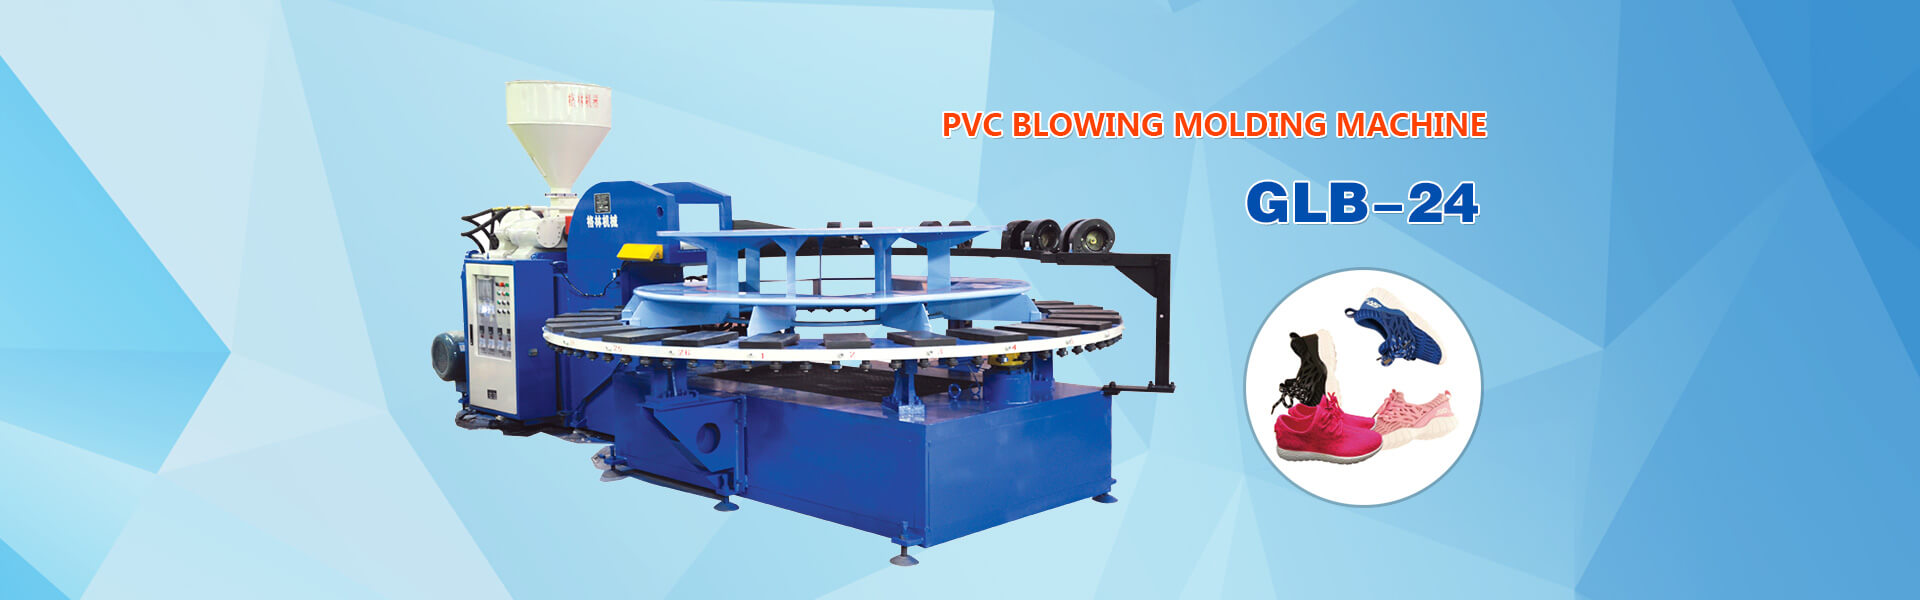 PVC Blowing Molding Machine